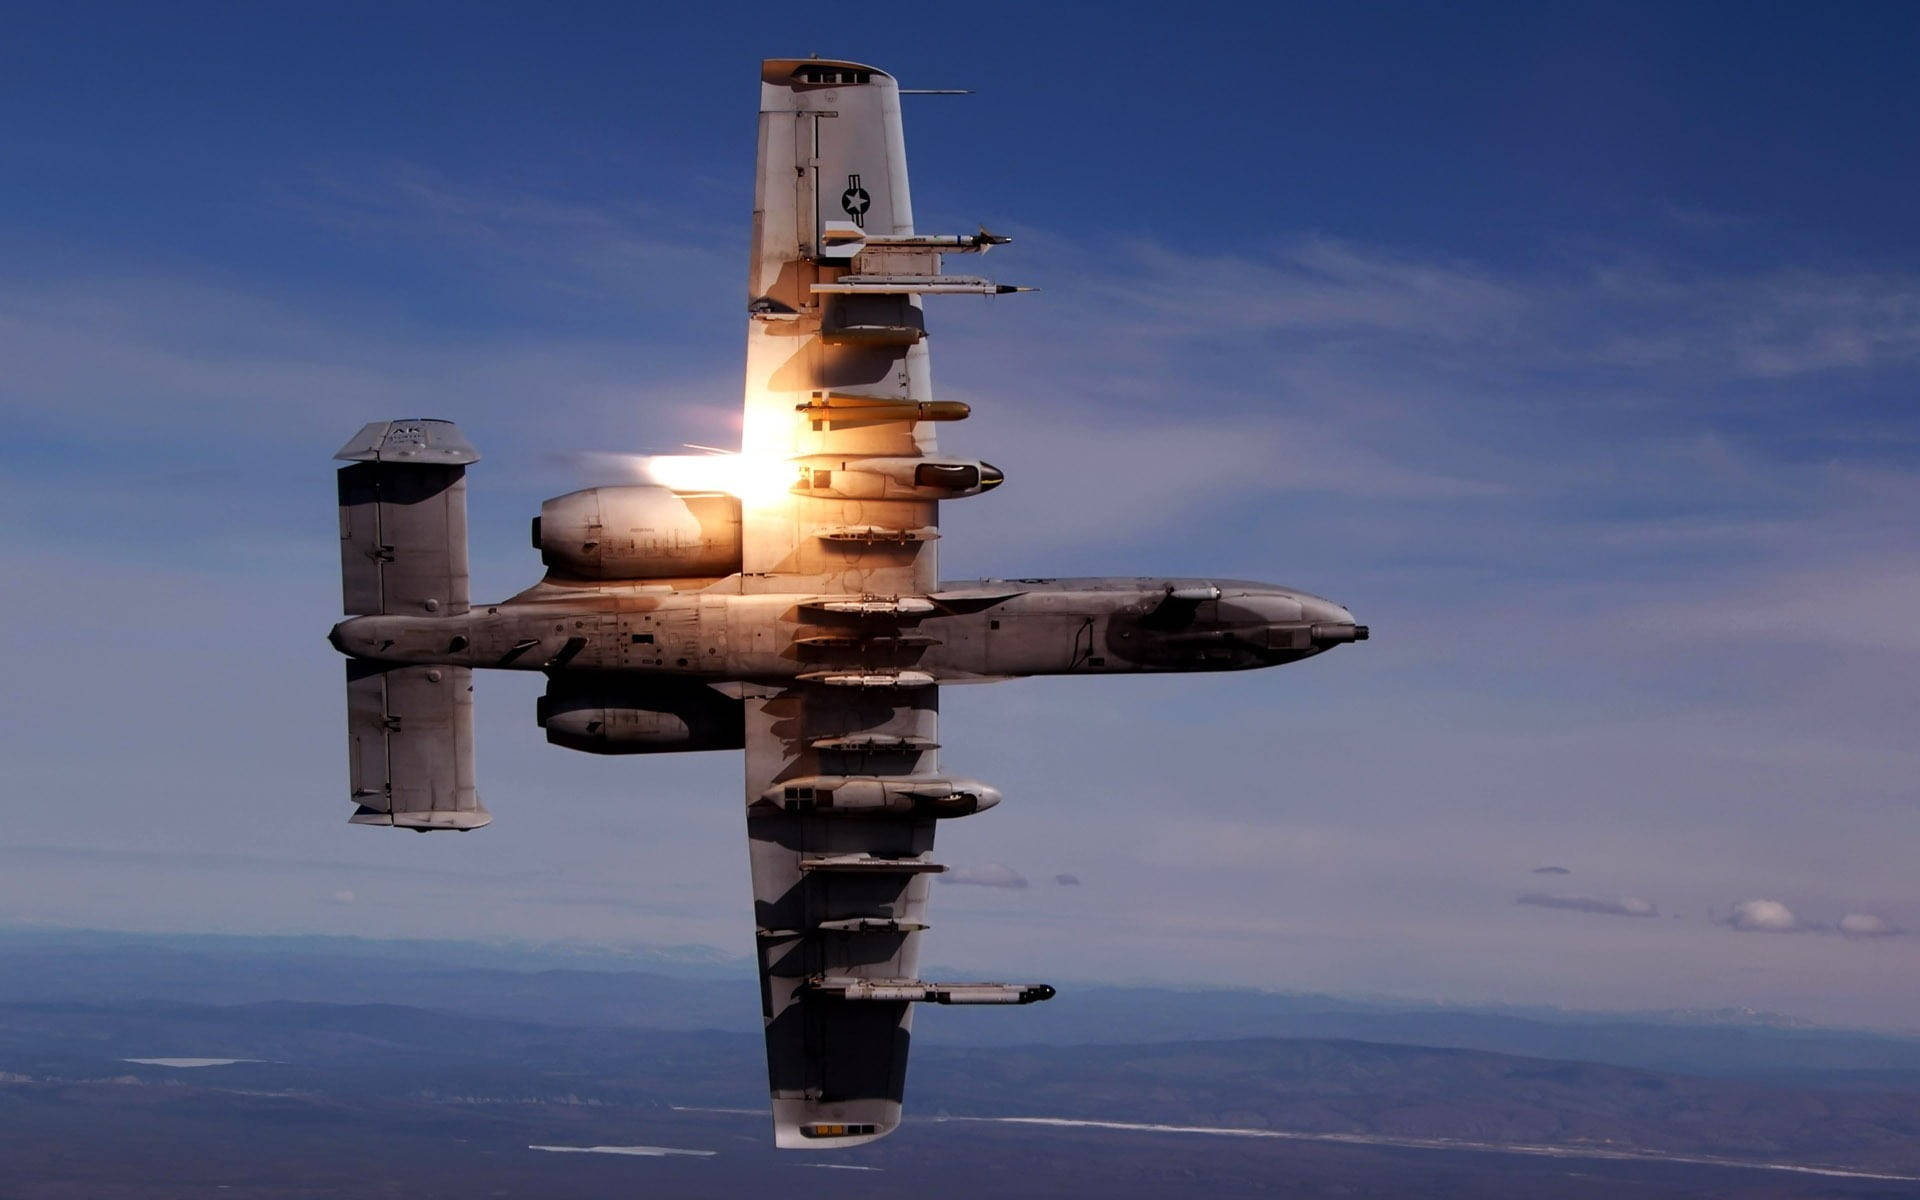 A-10 Warthog - The Fierce Military Aircraft